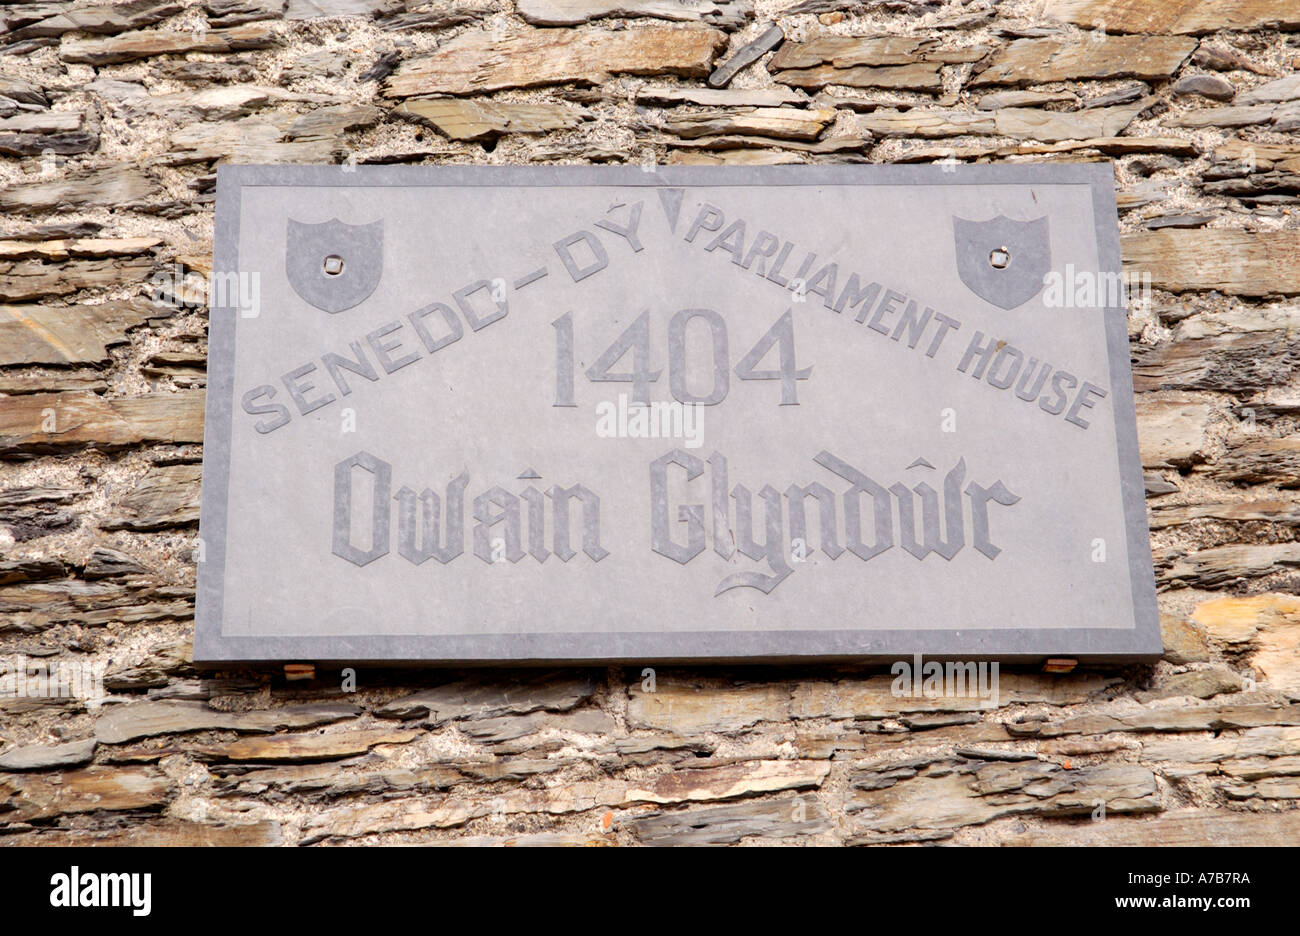 Schiefer Tafel auf Owain Glyndwr Senedd Parlament Haus datiert 1404 in Machynlleth Powys Mid Wales UK Stockfoto